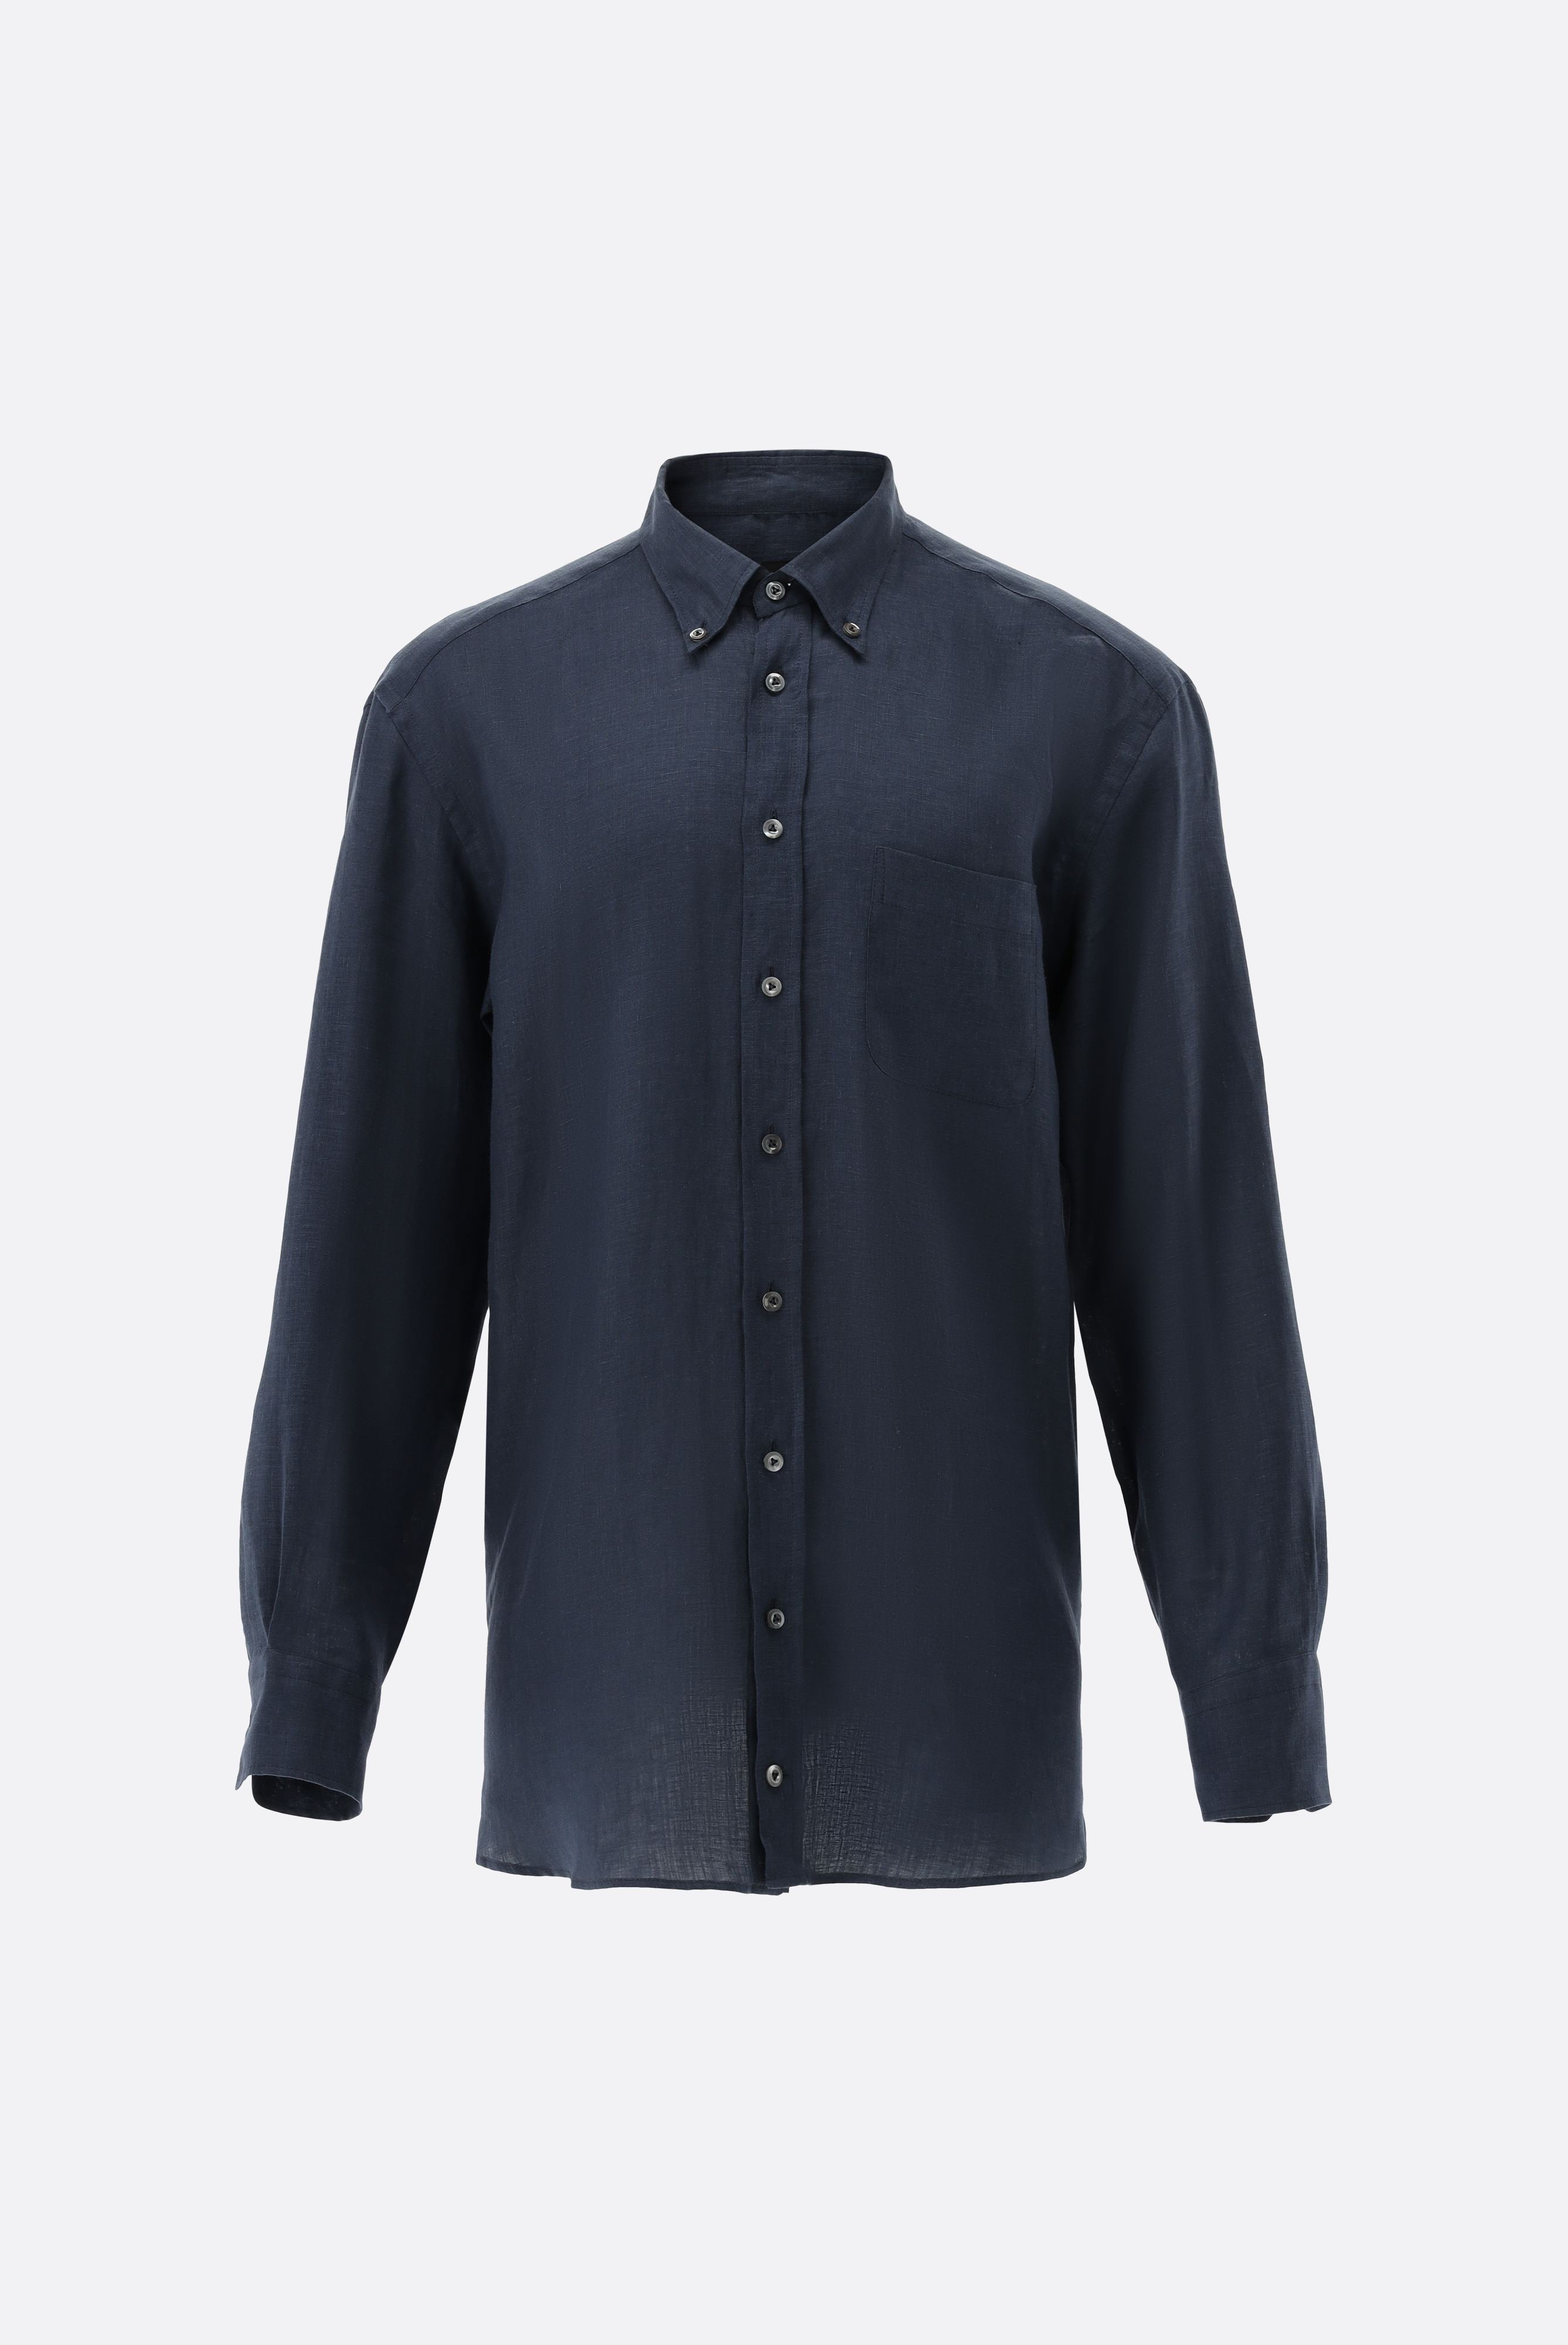 Casual Shirts+Linen Button-Down Collar Shirt+20.2026.9V.150555.785.39